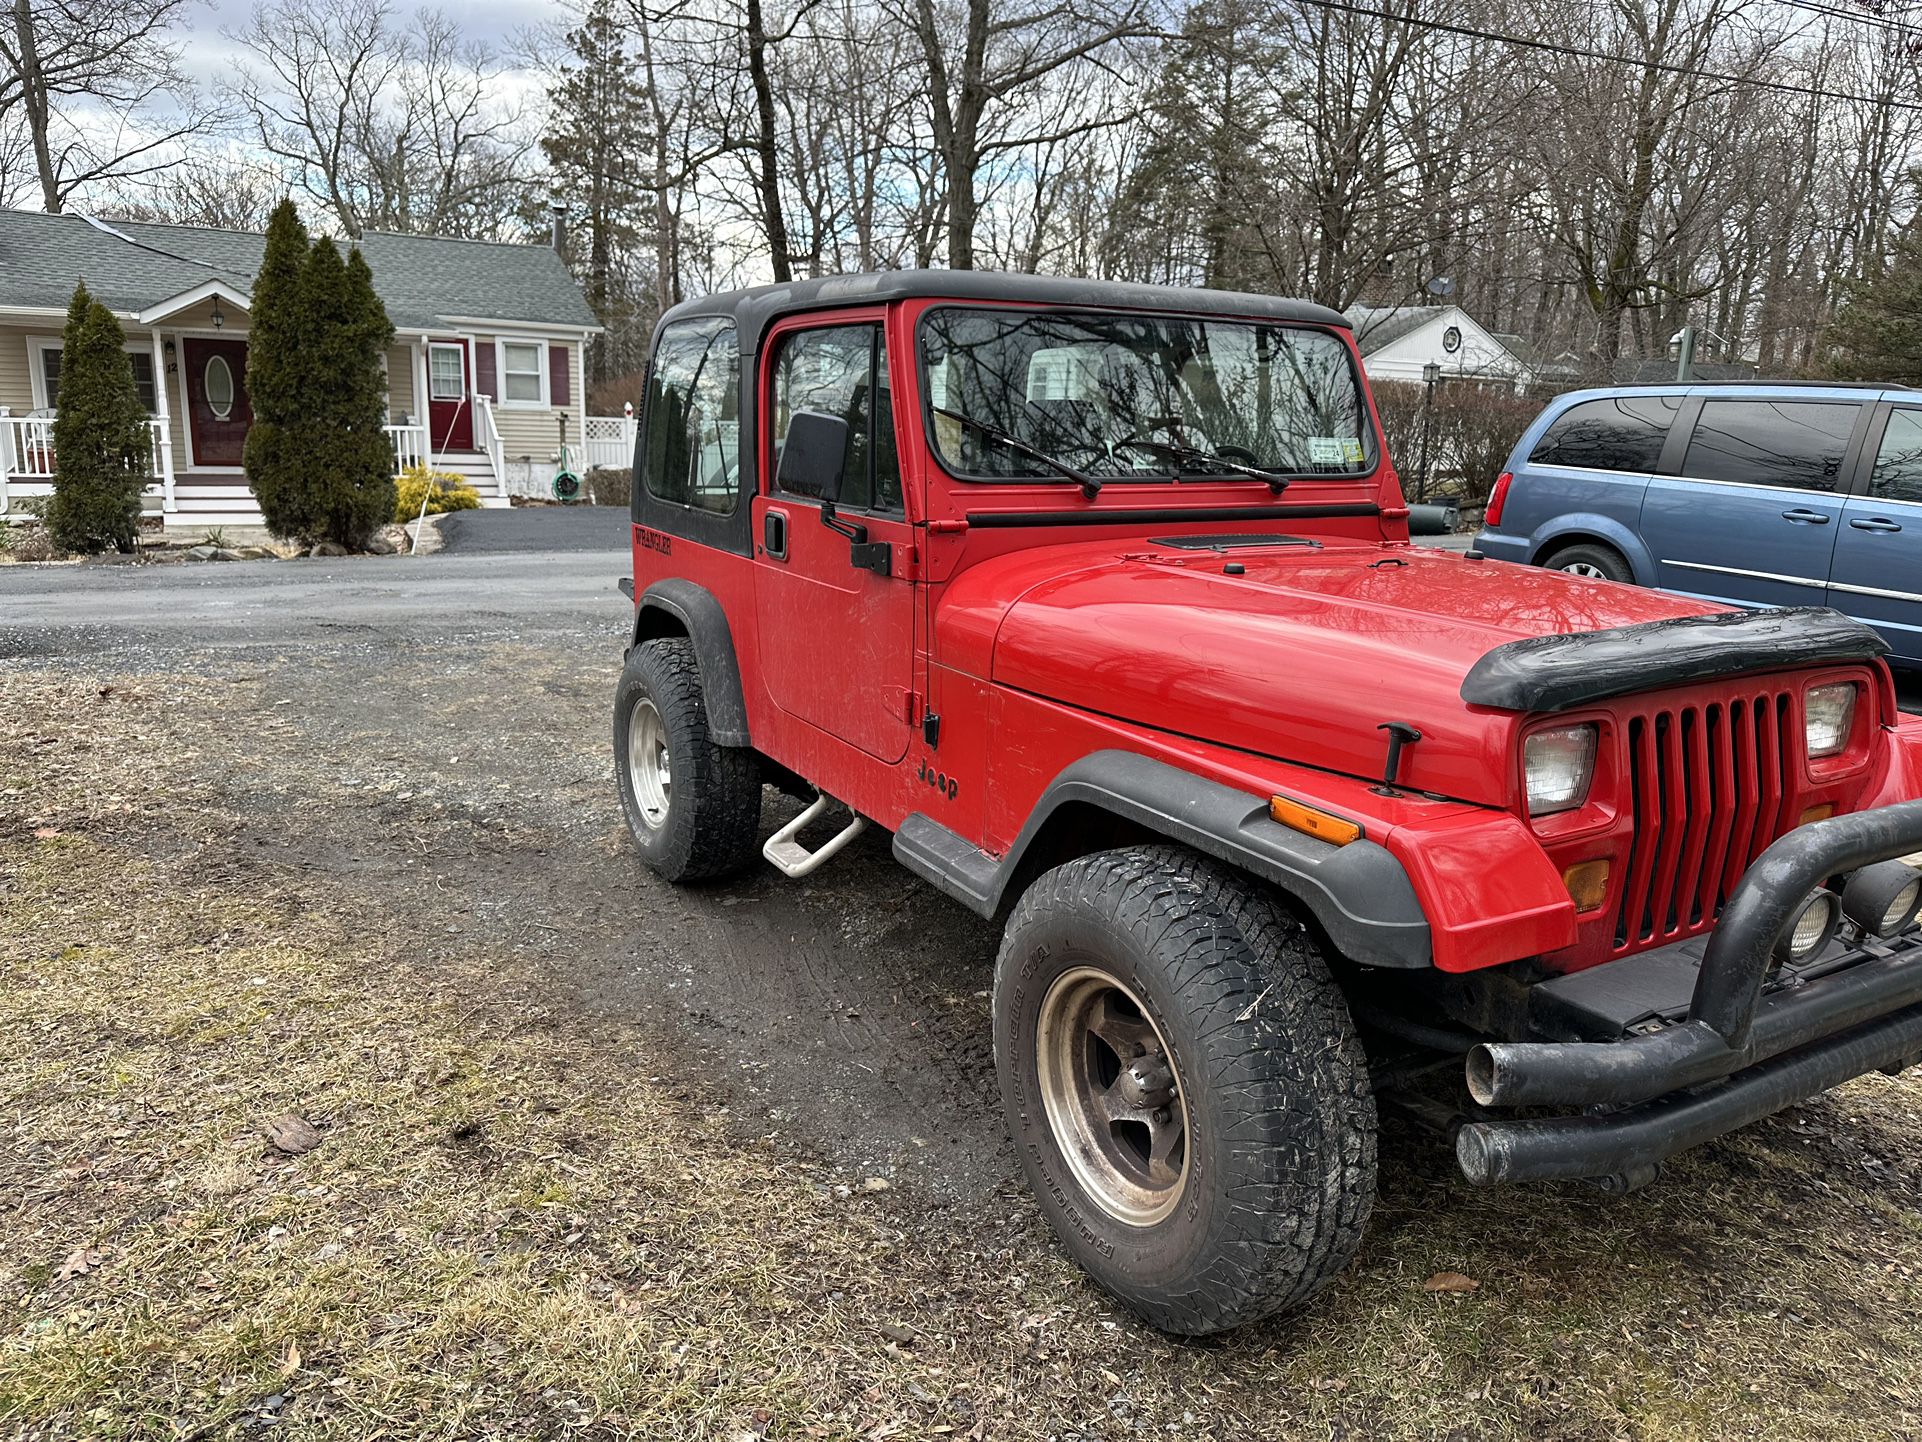 1995 Jeep Wrangler for Sale in Washingtonvle, NY - OfferUp